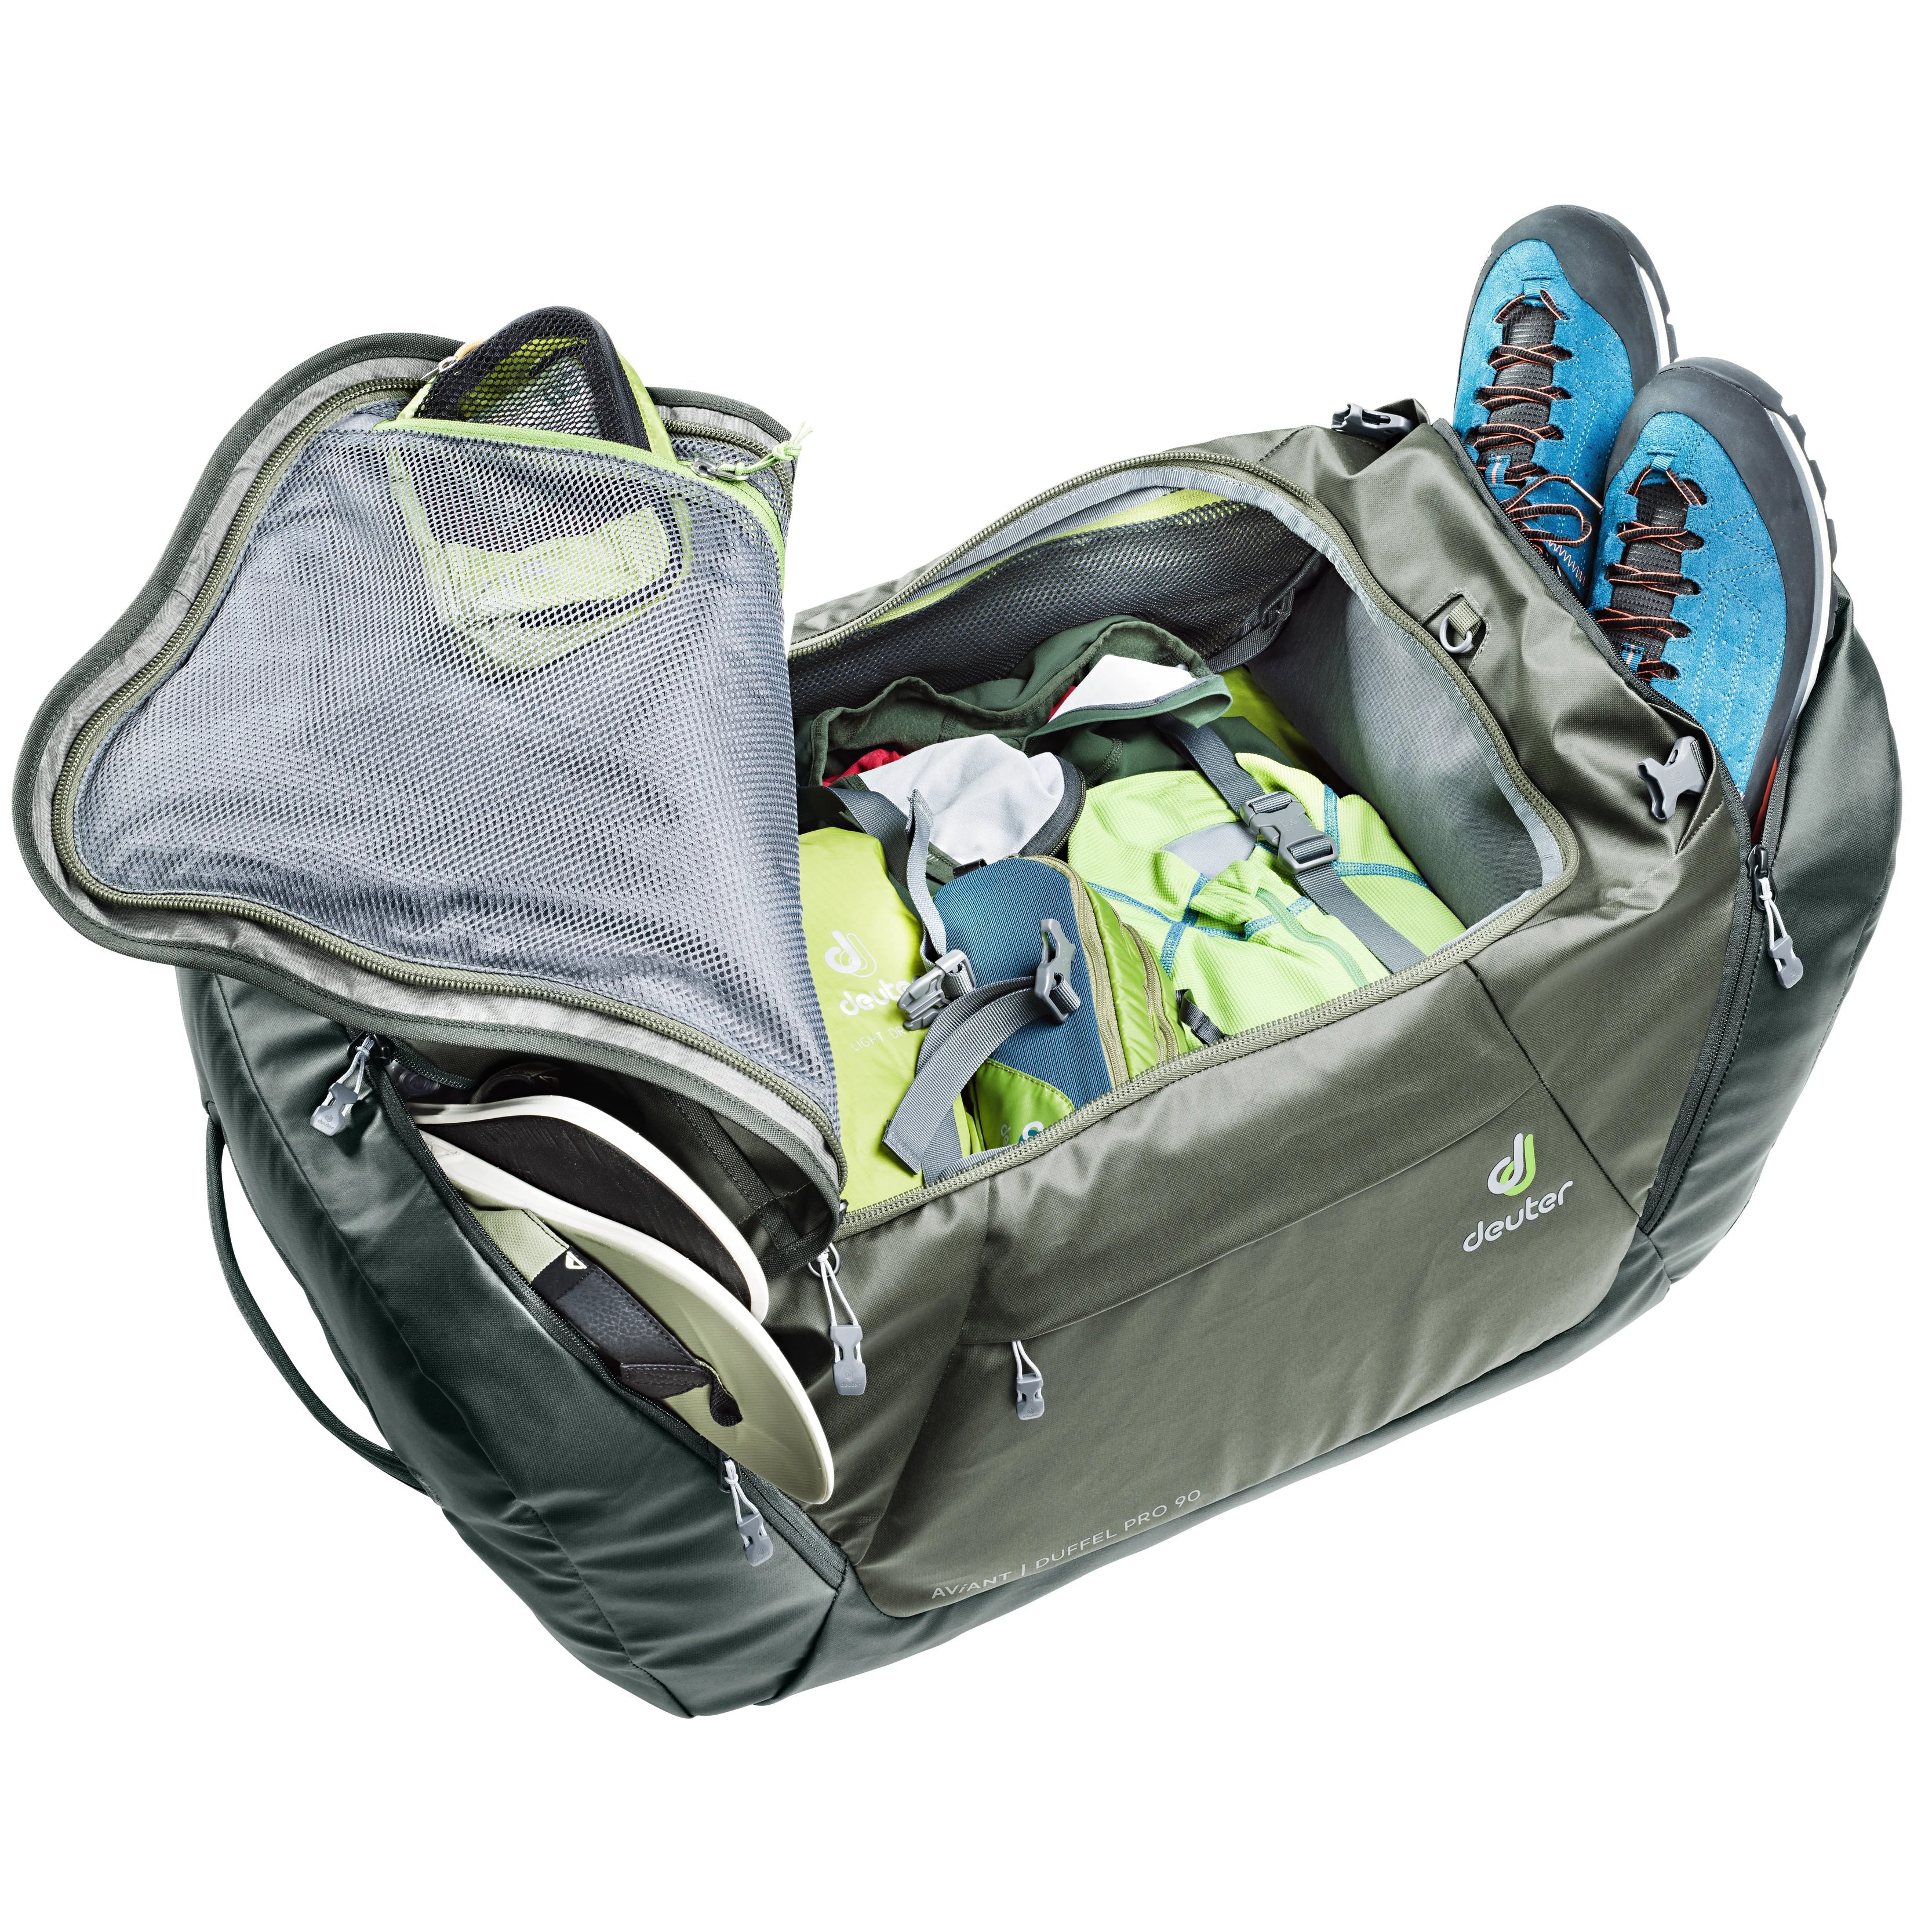 Deuter Travel Aviant Duffle Pro 40 travel bag 52 cm - jade-seagreen